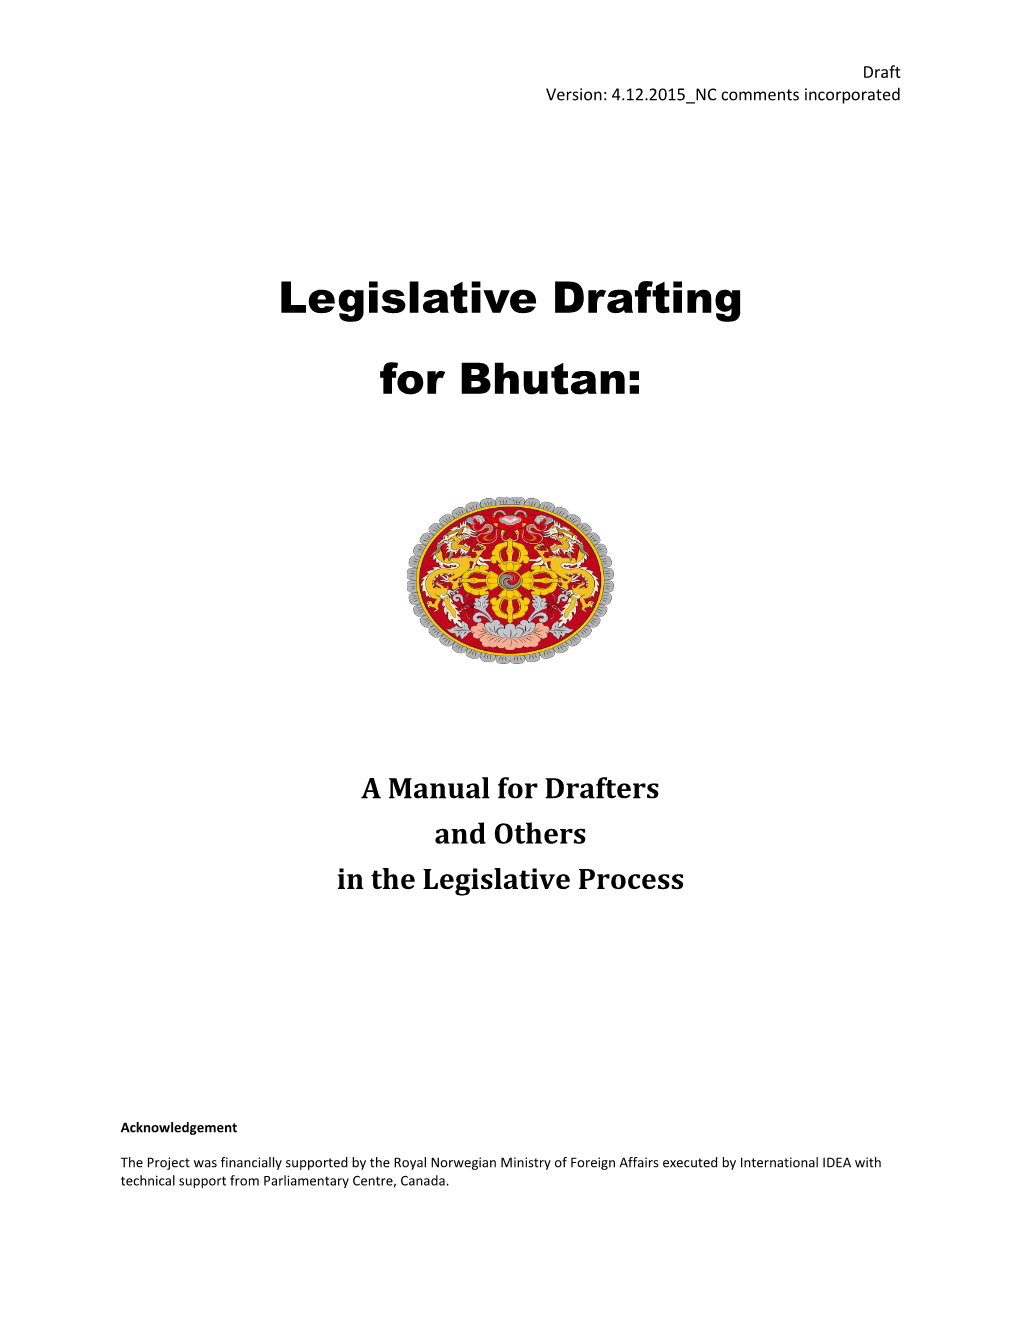 Legislative Drafting for Bhutan